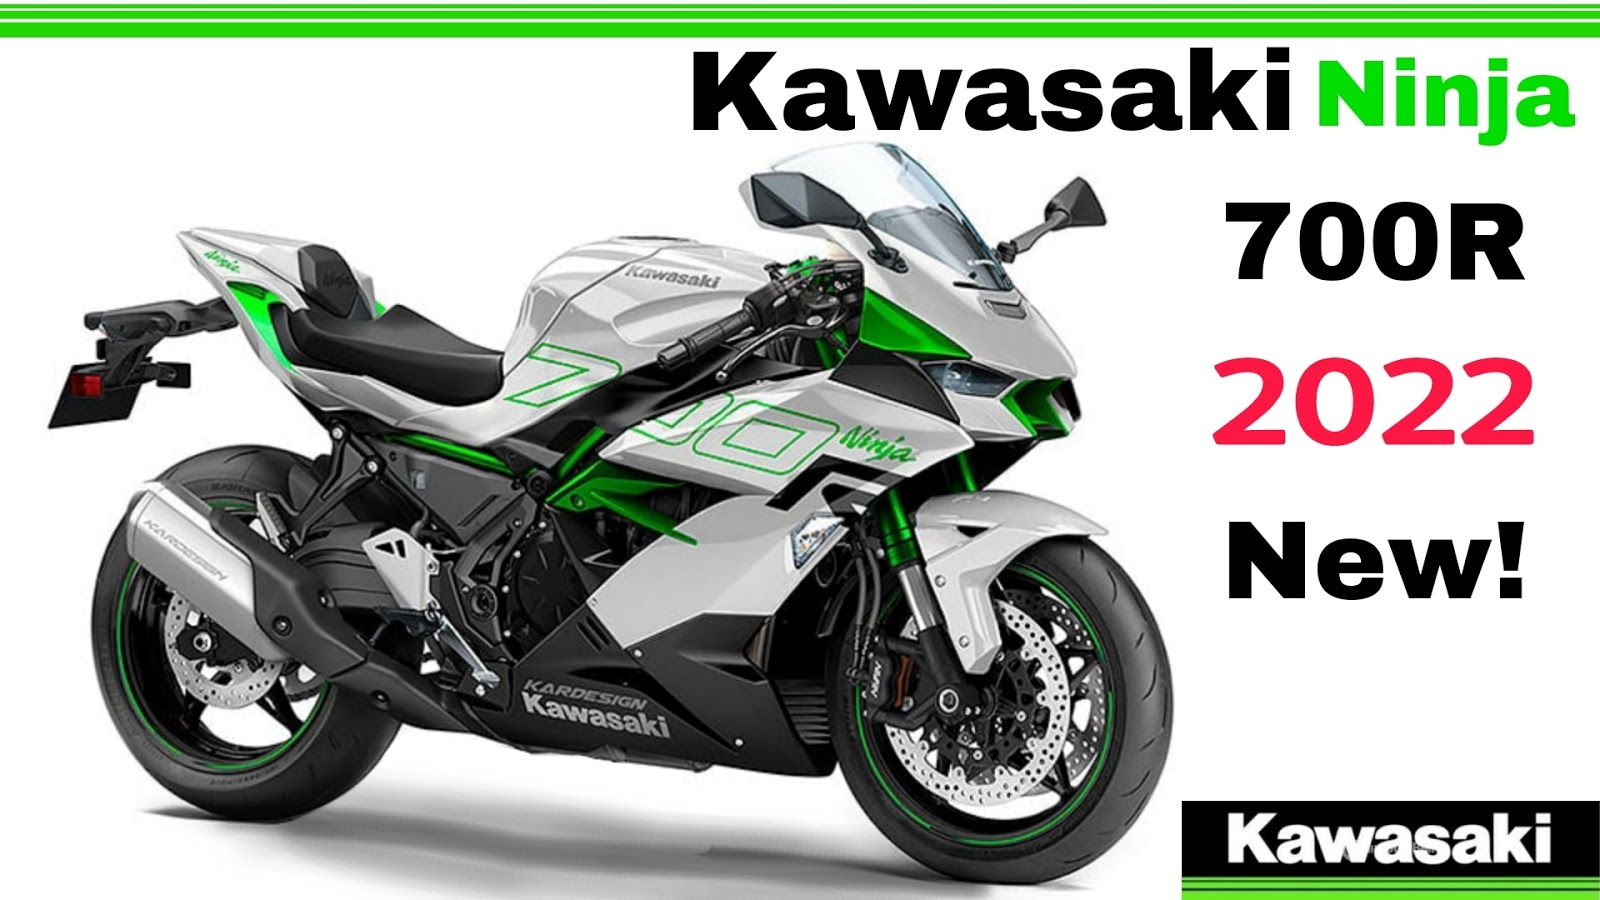 Kawasaki is all set to on Ninja 700r with whole new look.